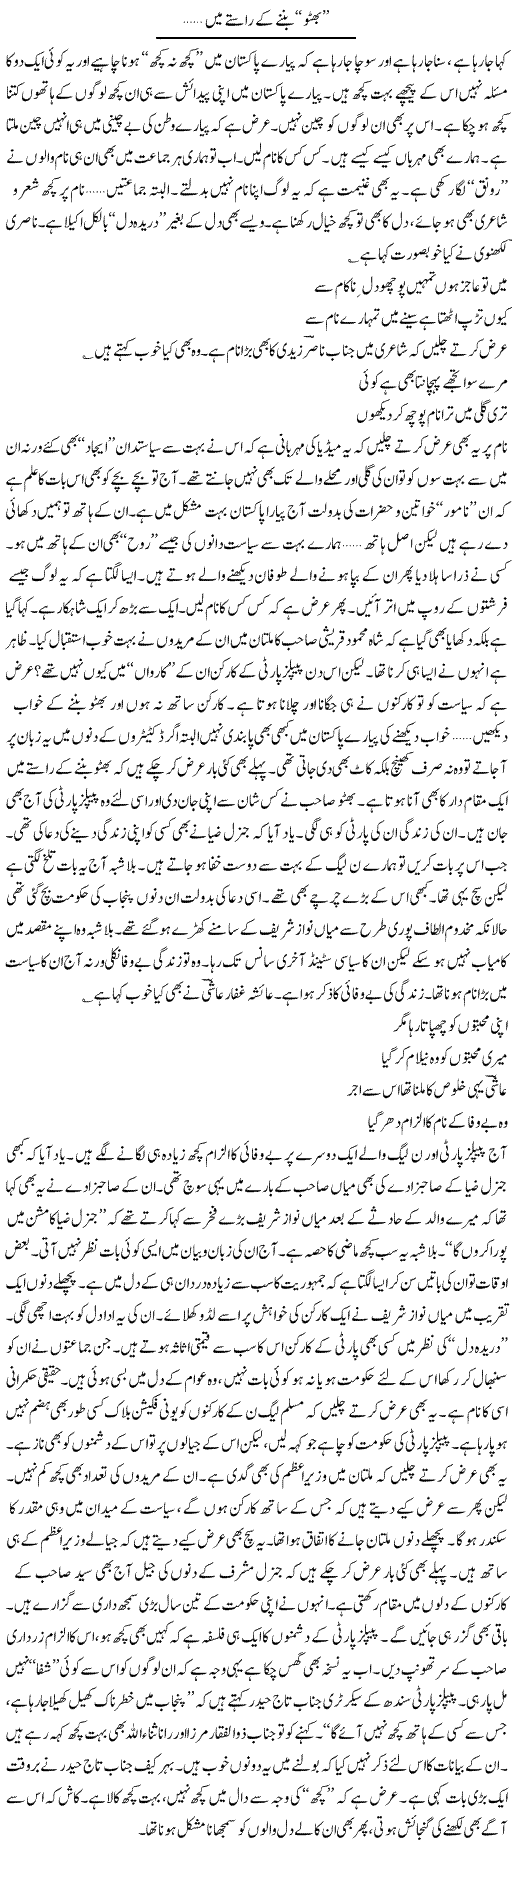 Way of Bhutto Express Column Ijaz Hafeez 5 March 2011